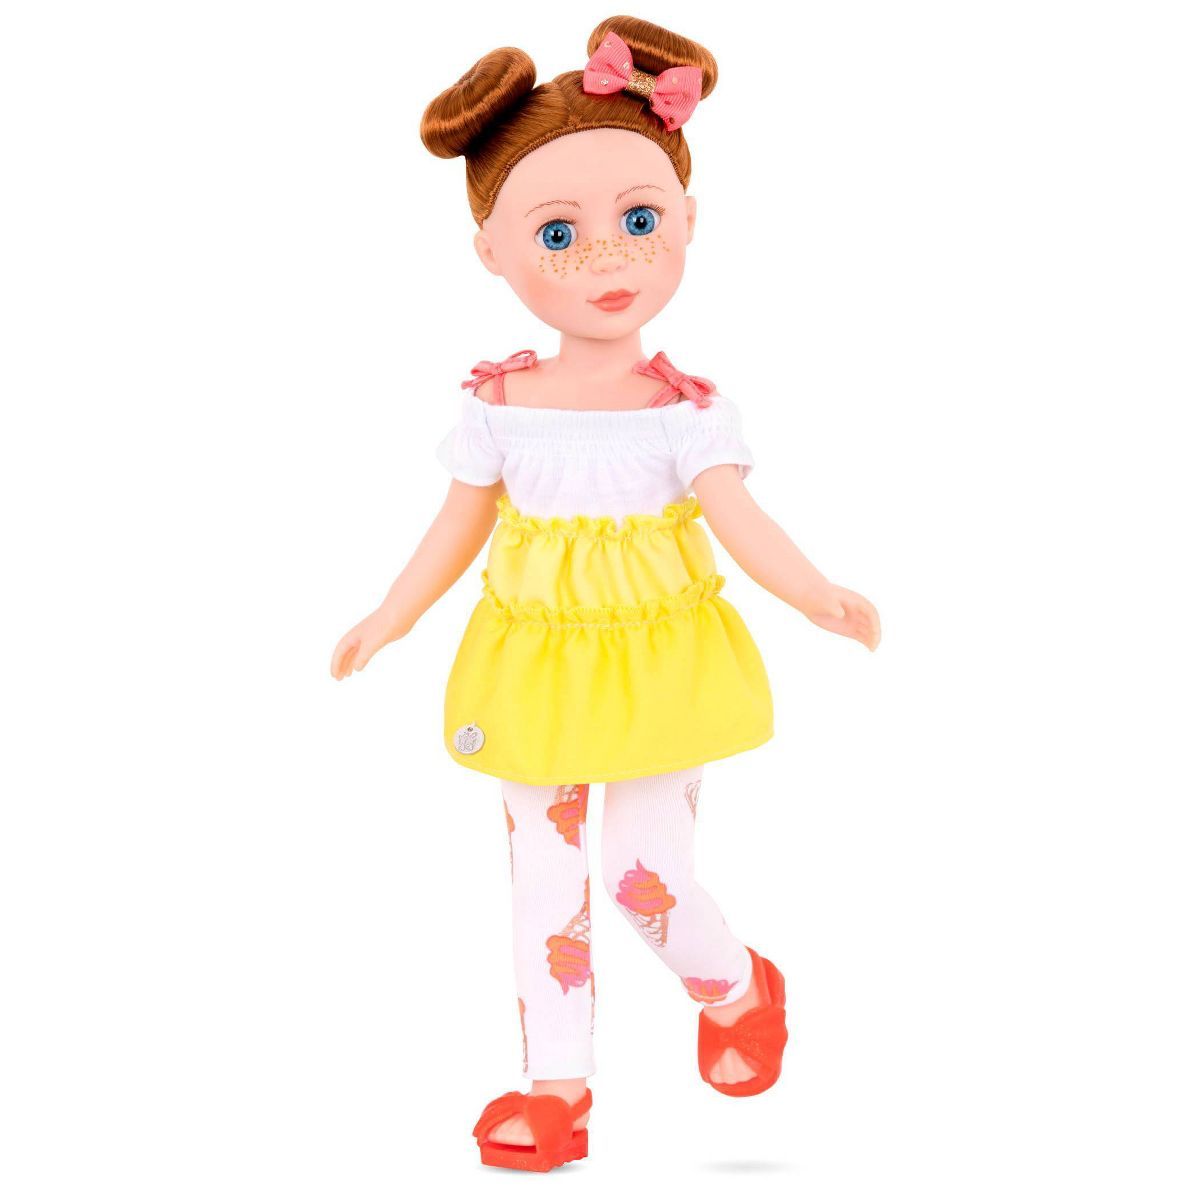 Glitter Girls 14" Poseable Fashion Doll - Charlie | Target